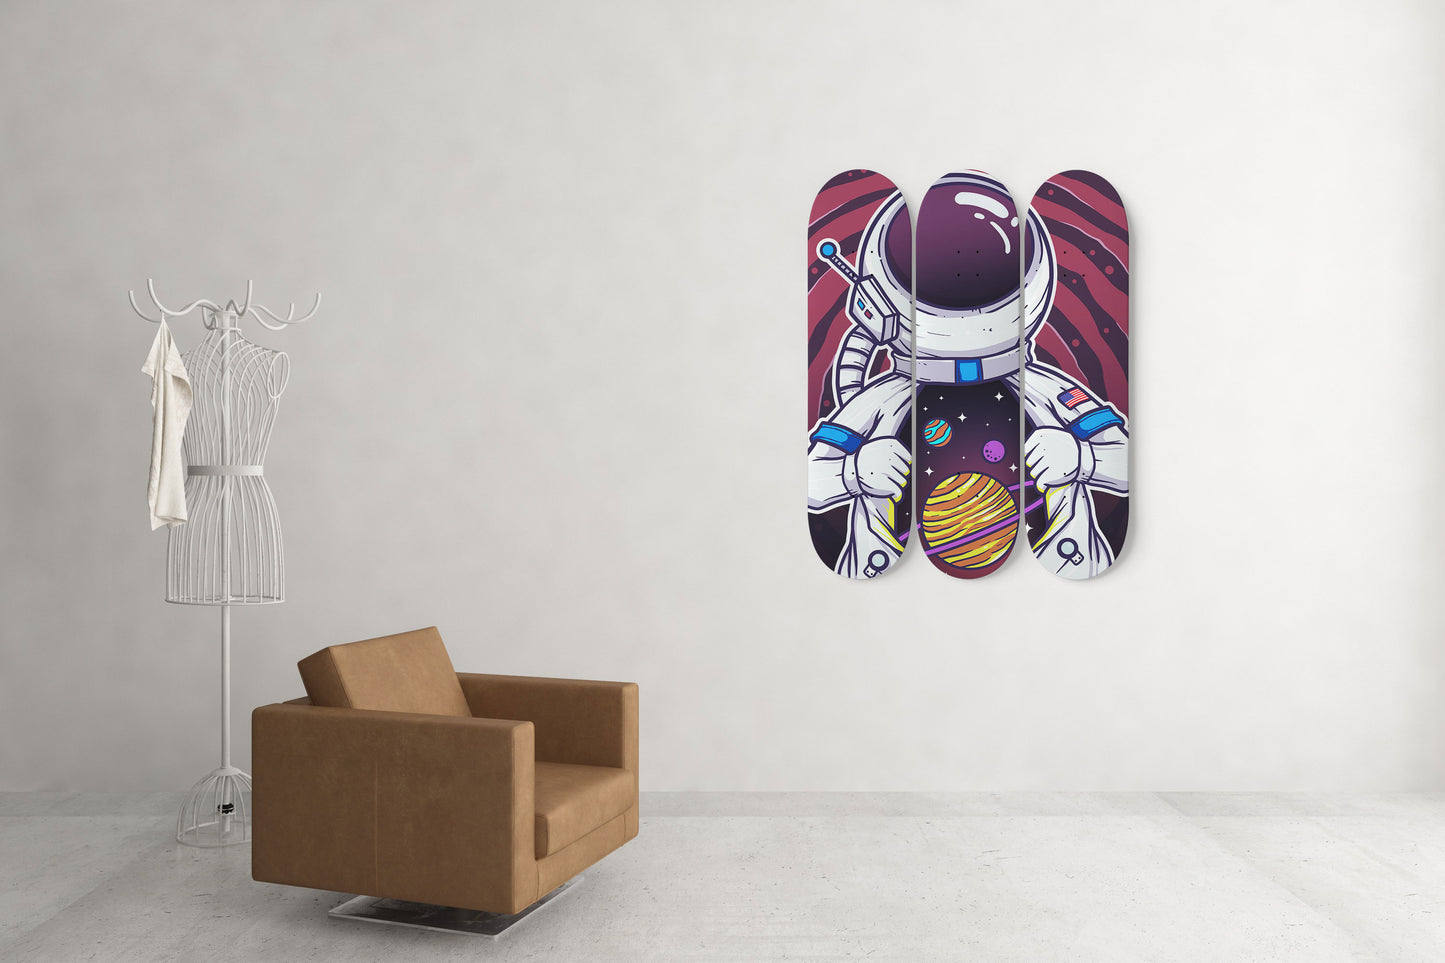 Galaxy Within My Soul 3 Deck Skateboard Wall Art :Cosmic Inspiration